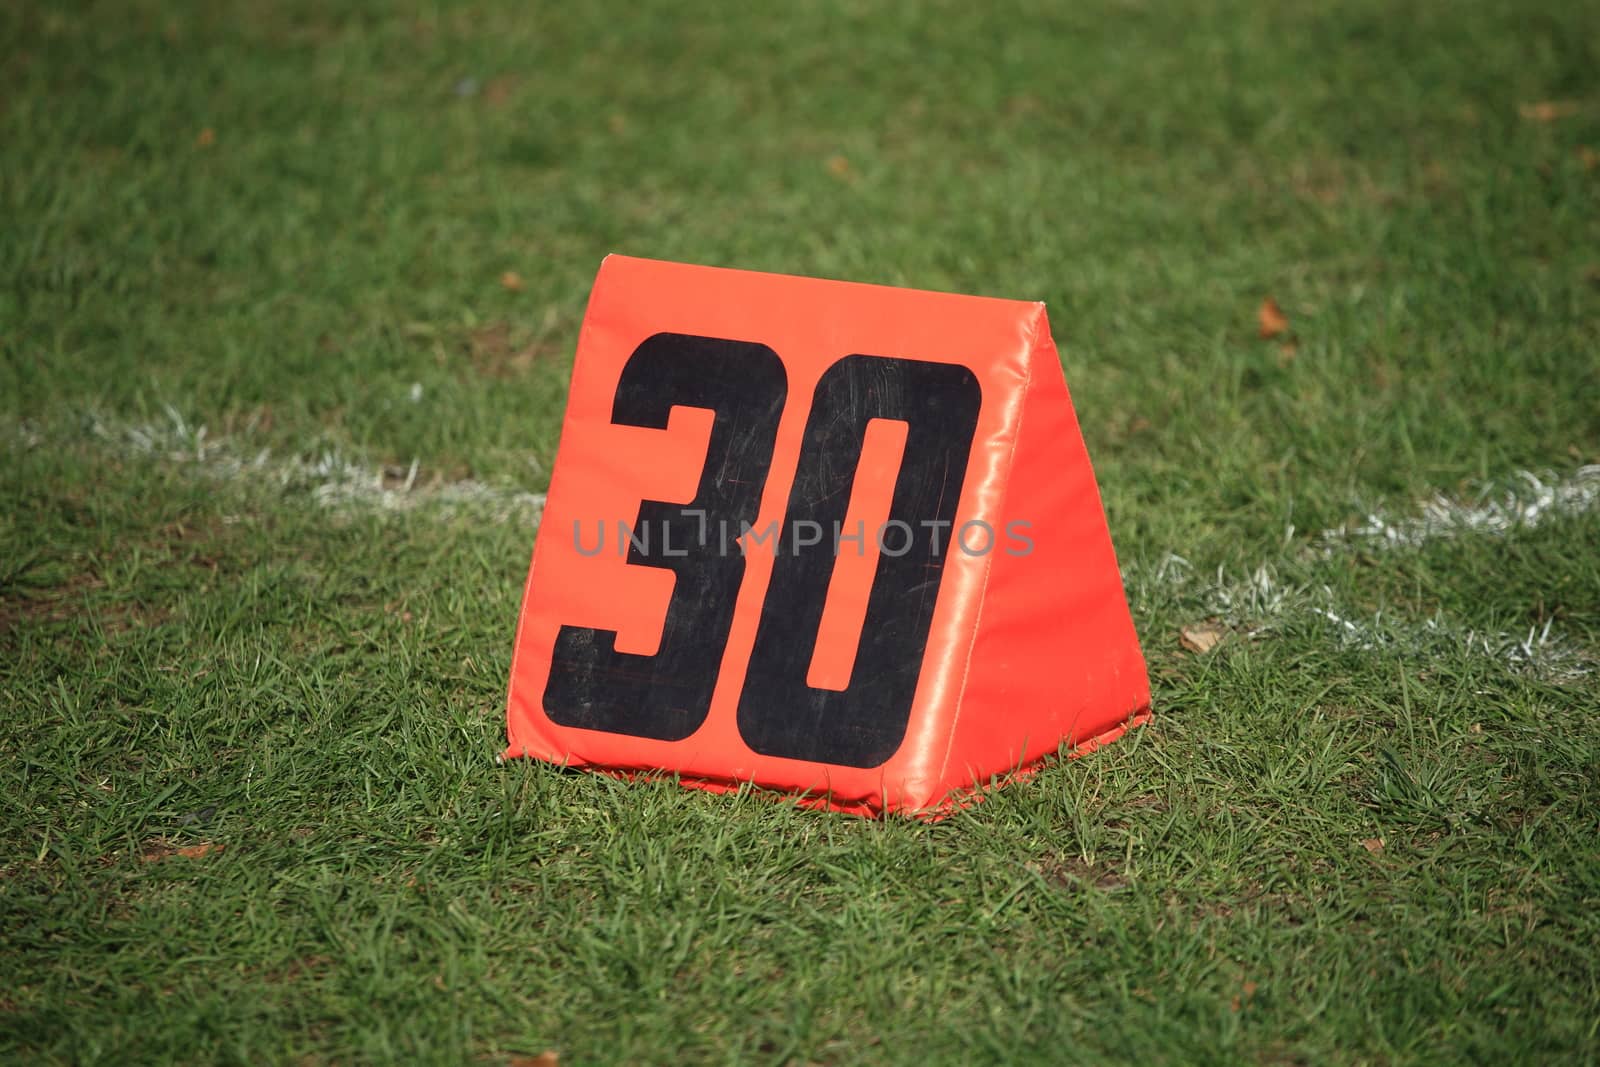 Thirty 30 yard line marker on grass playing football field.